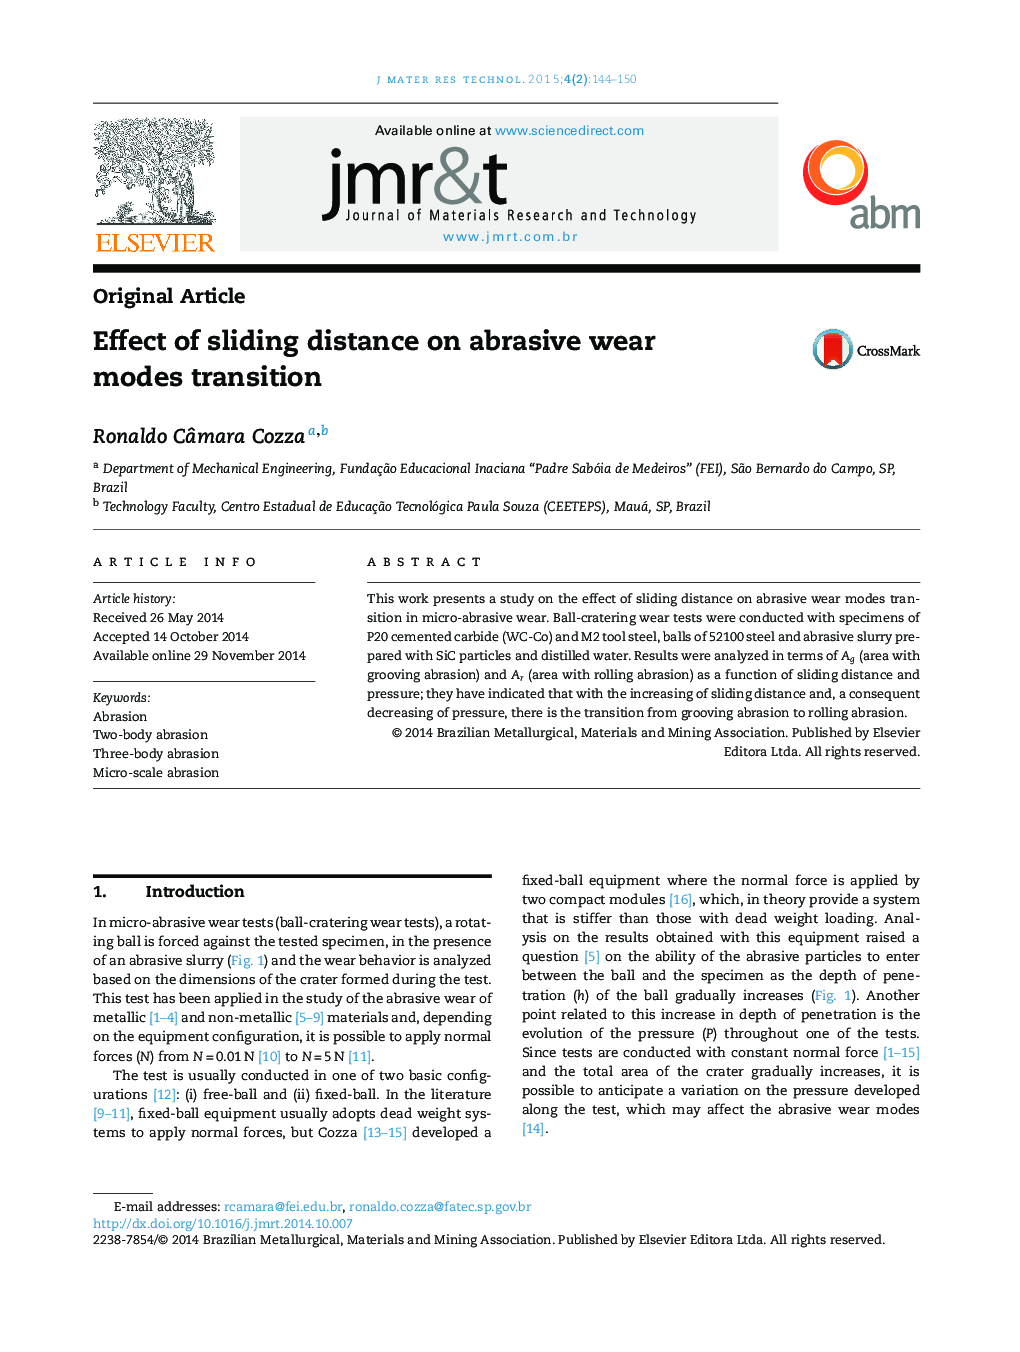 Effect of sliding distance on abrasive wear modes transition